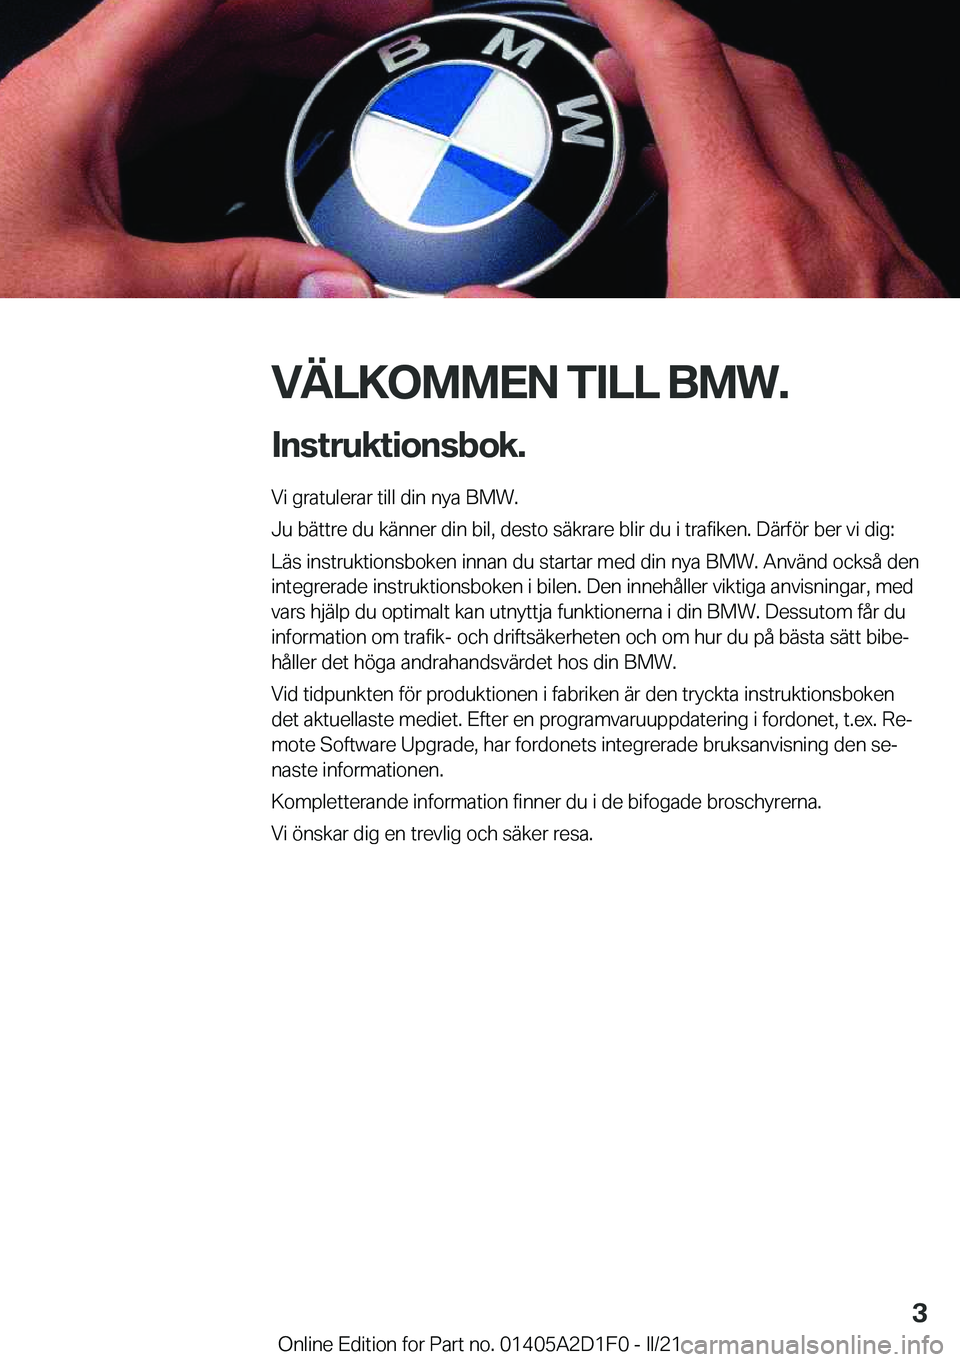 BMW X6 M 2021  InstruktionsbÖcker (in Swedish) �V�Ä�L�K�O�M�M�E�N��T�I�L�L��B�M�W�.�I�n�s�t�r�u�k�t�i�o�n�s�b�o�k�.
�V�i��g�r�a�t�u�l�e�r�a�r��t�i�l�l��d�i�n��n�y�a��B�M�W�.
�J�u��b�ä�t�t�r�e��d�u��k�ä�n�n�e�r��d�i�n��b�i�l�,��d�e�